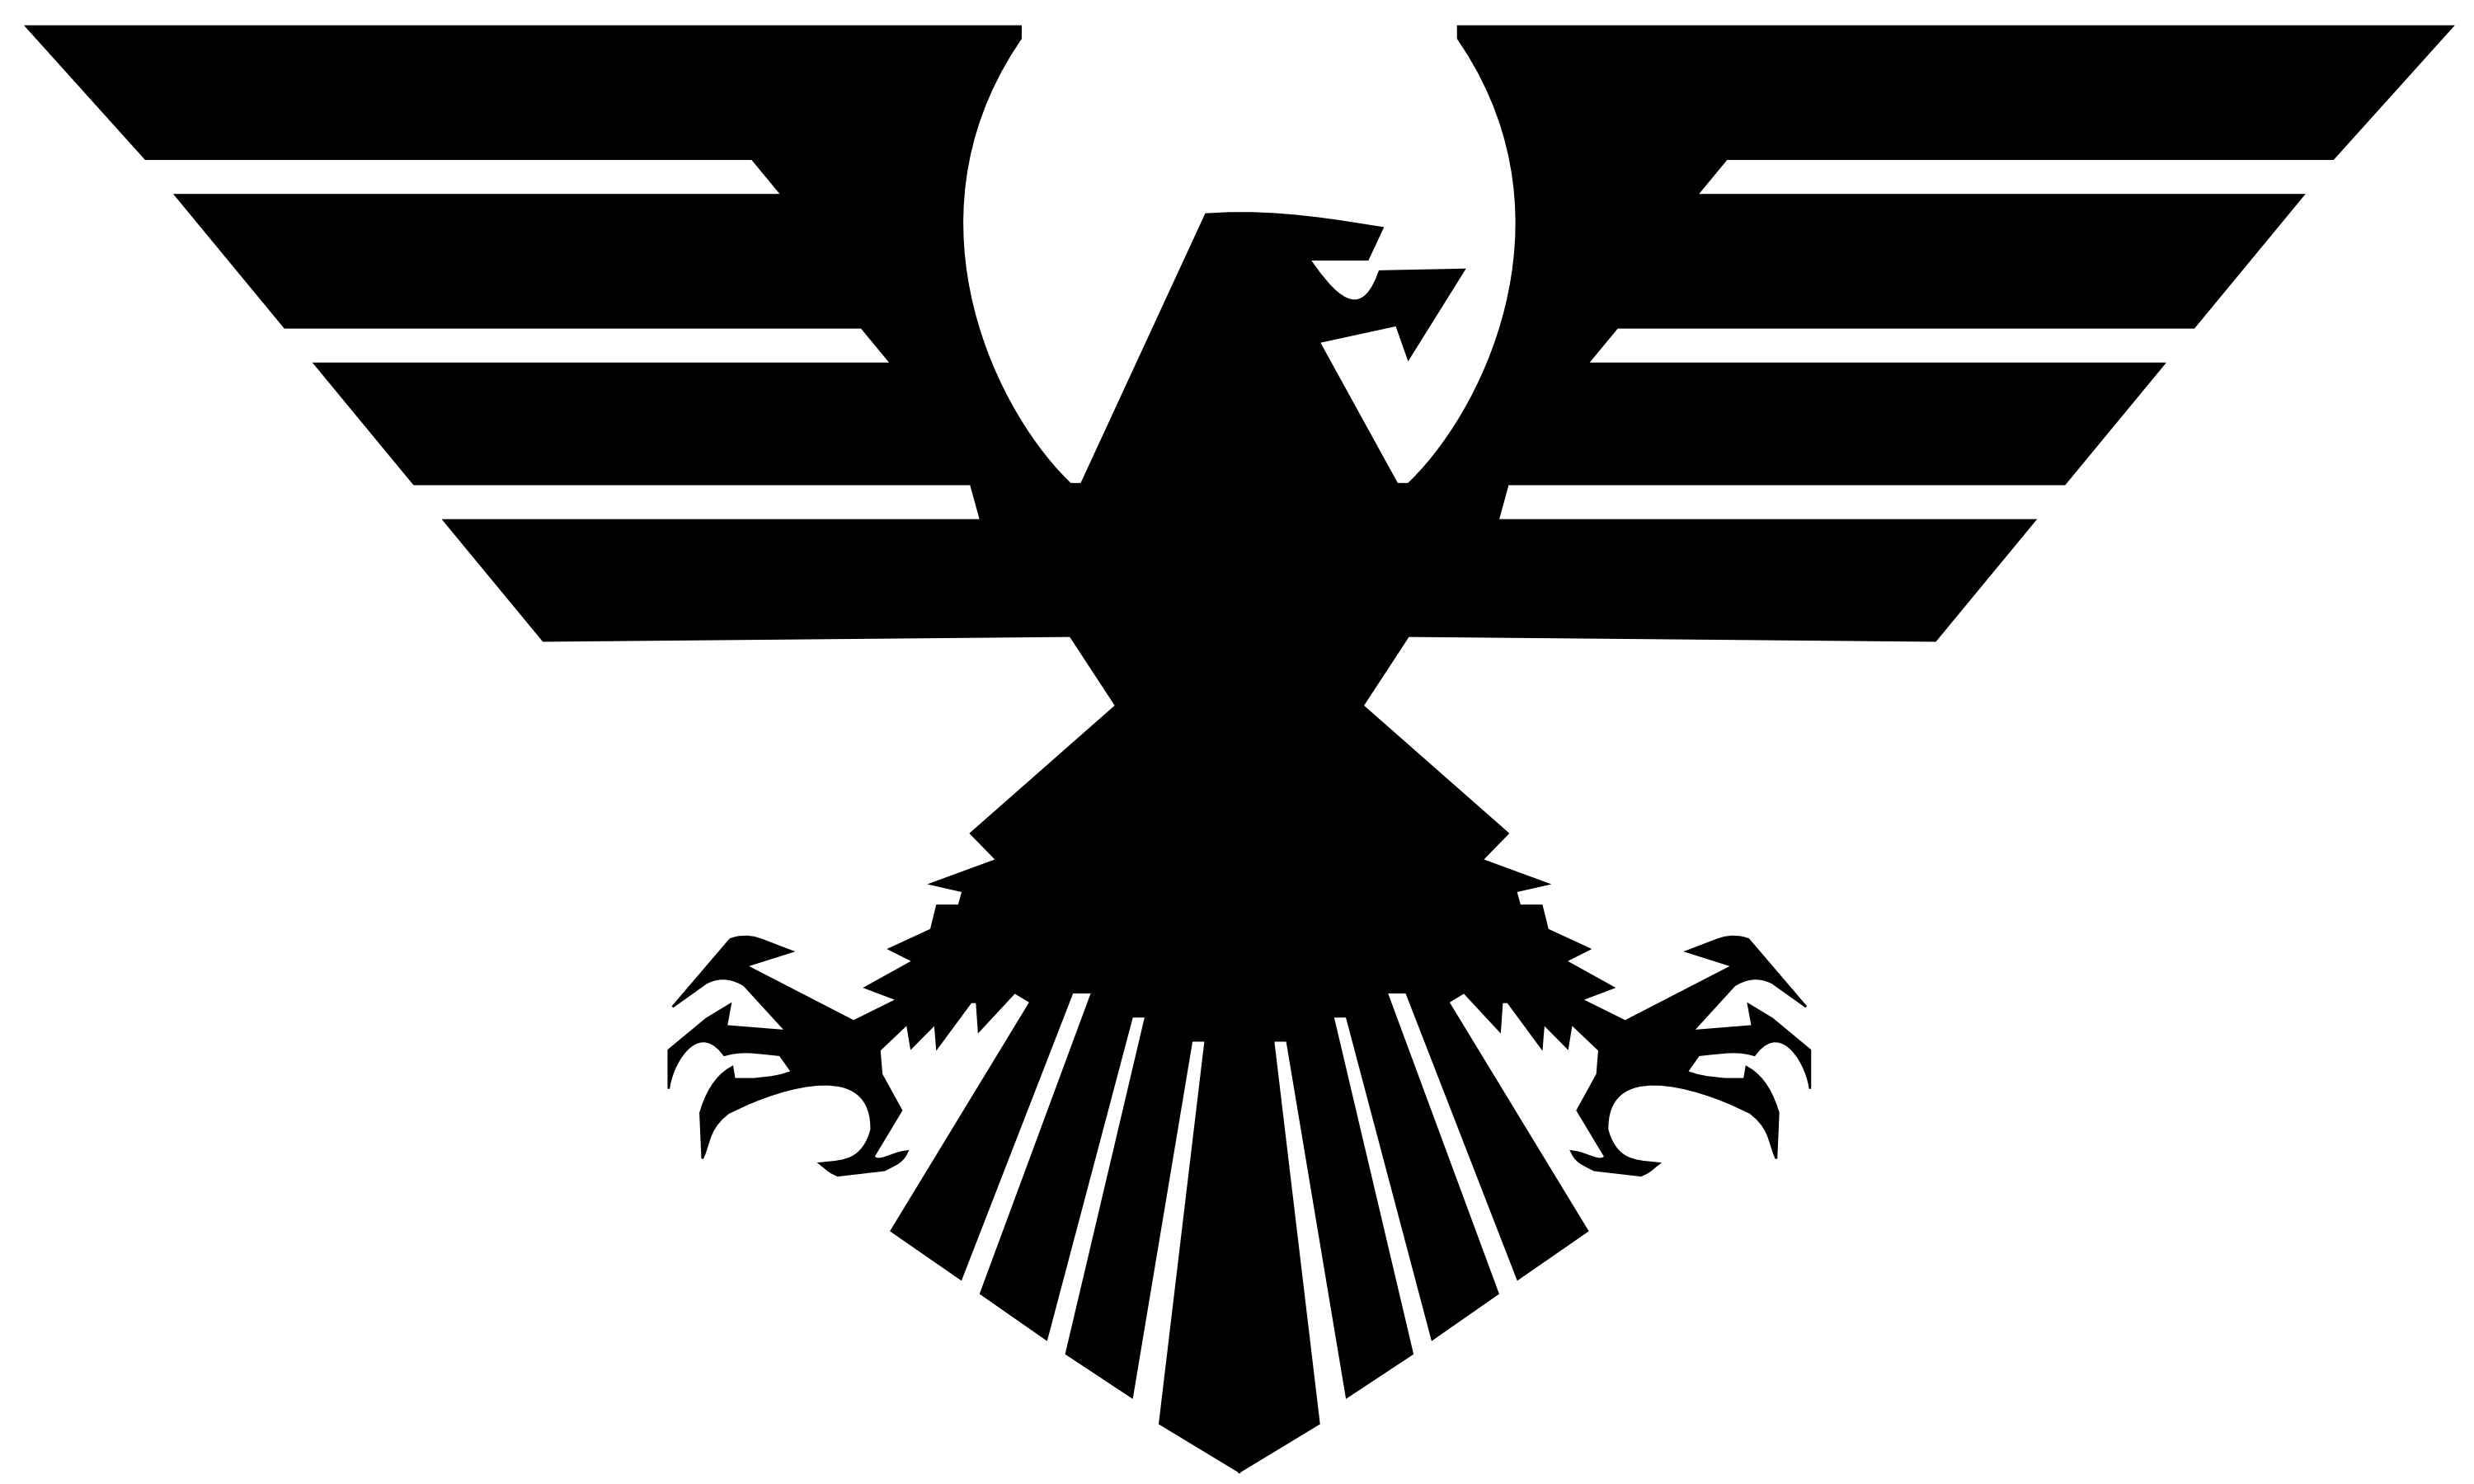 Free Eagle Logo Design Black And White, Download Free Clip ... - Patriotic Eagle Silhouette